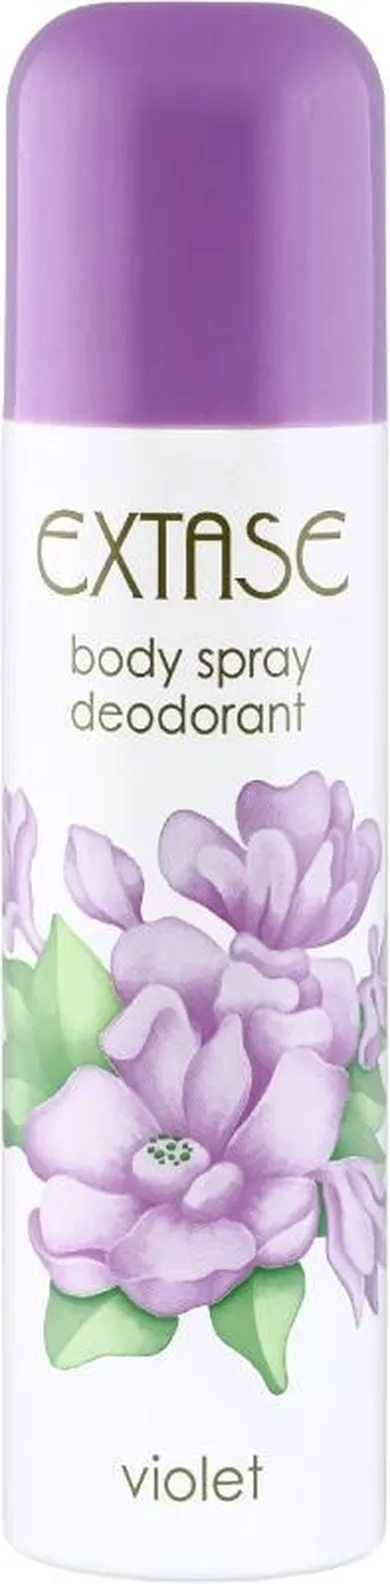 Extase, dezodorant, body spray, violet, 150 ml